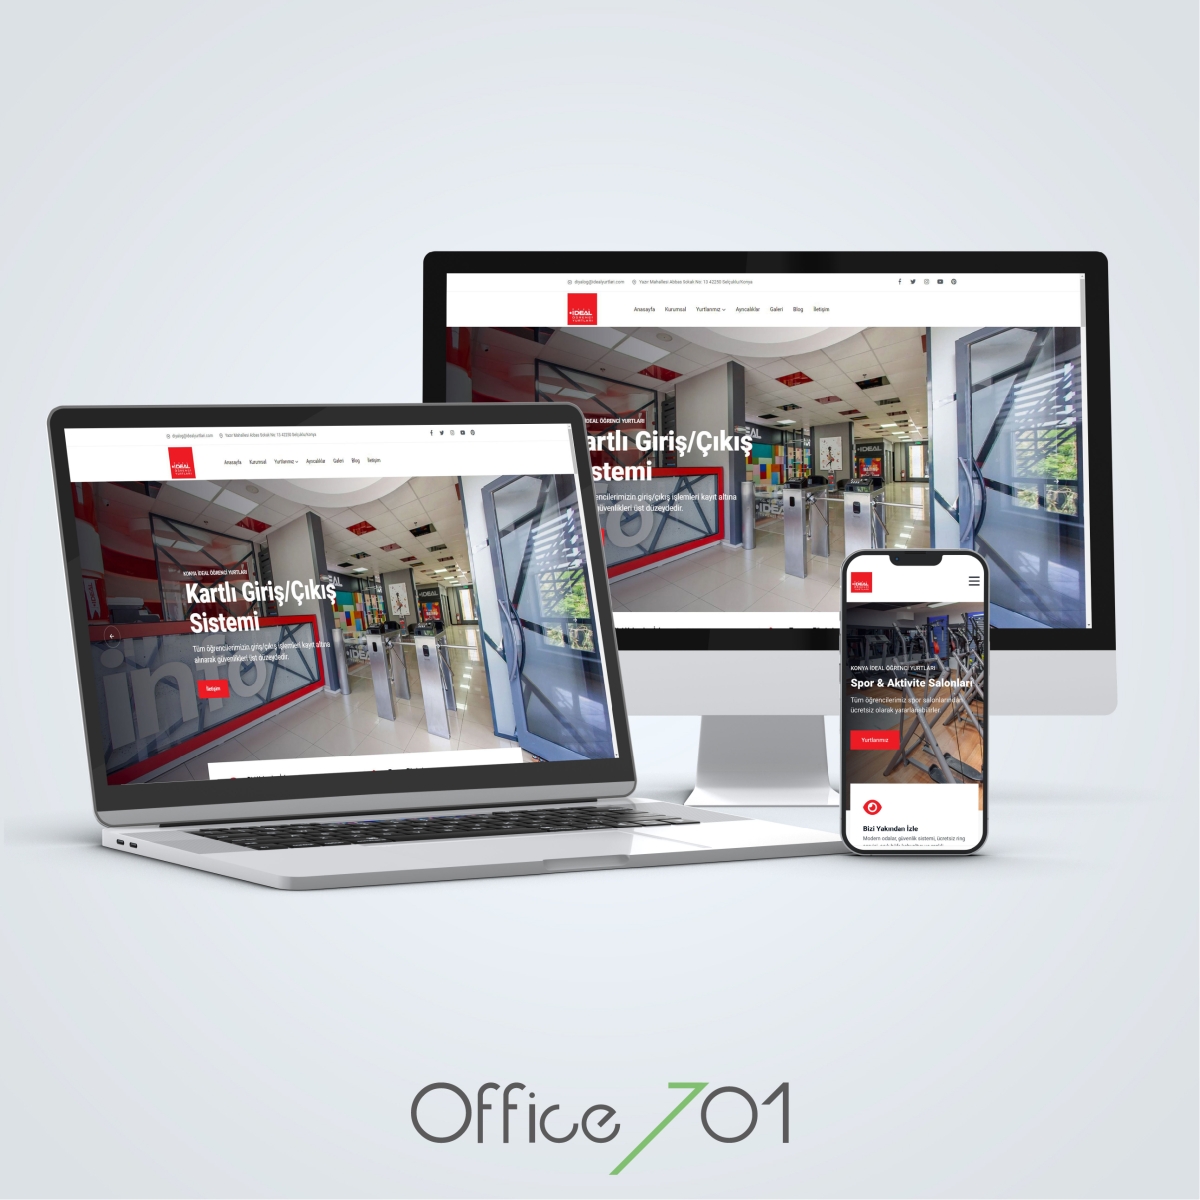 Office701 | Konya İdeal | Student Dormitory Website